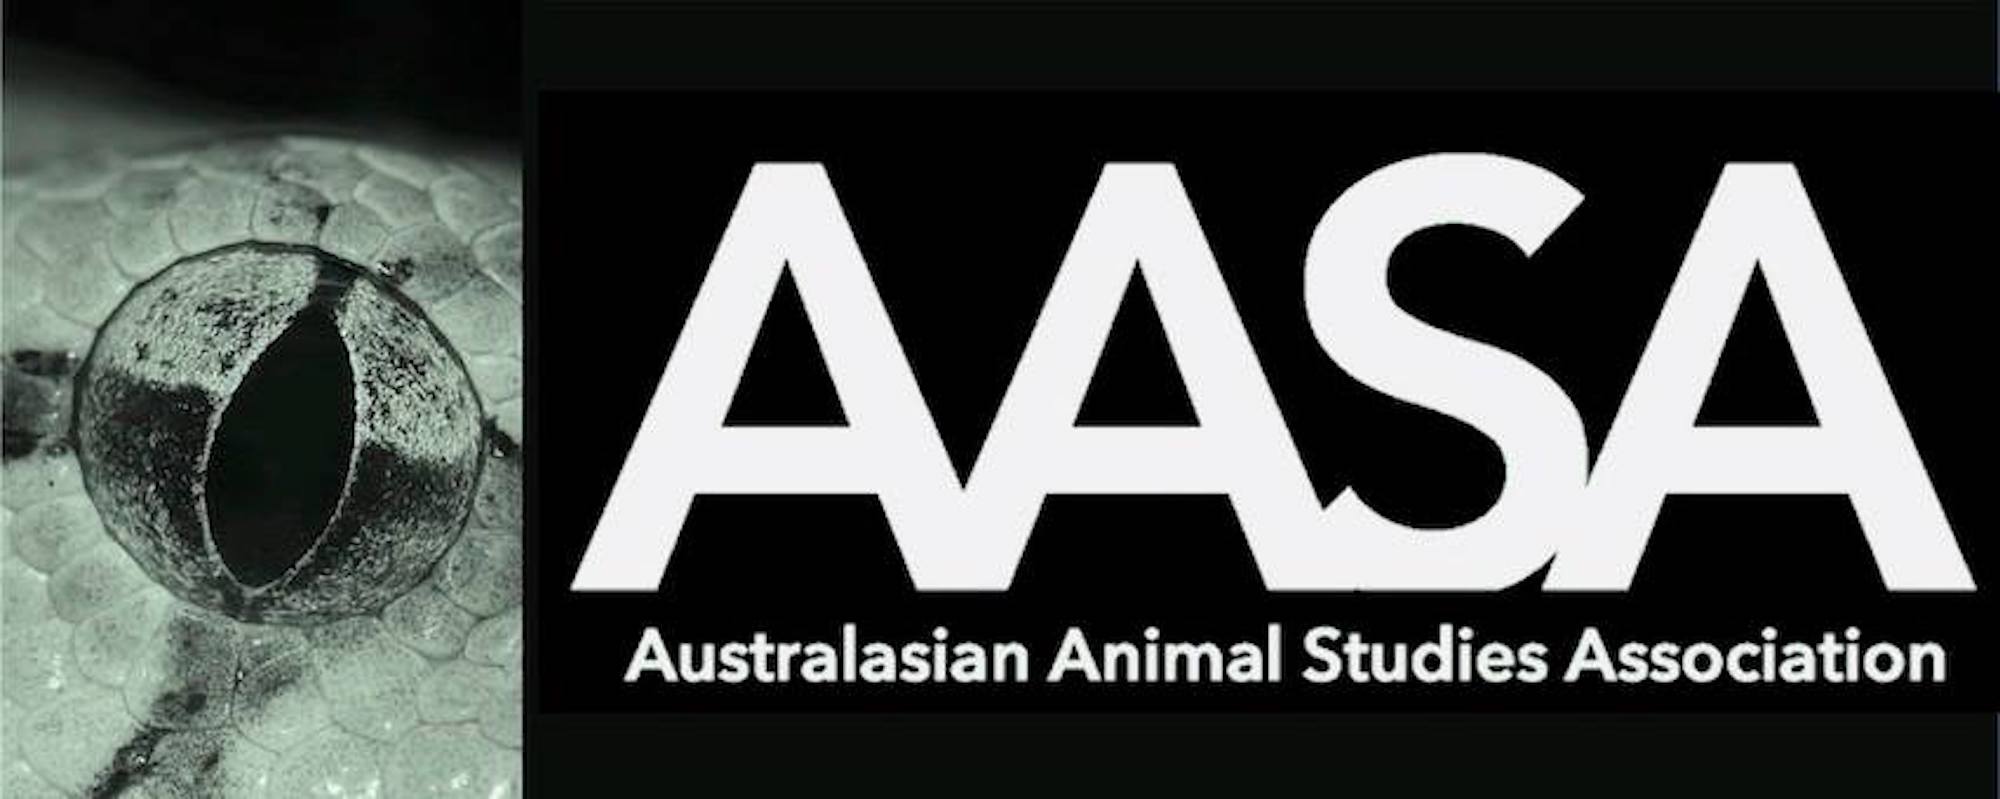 Australasian Animal Studies Association